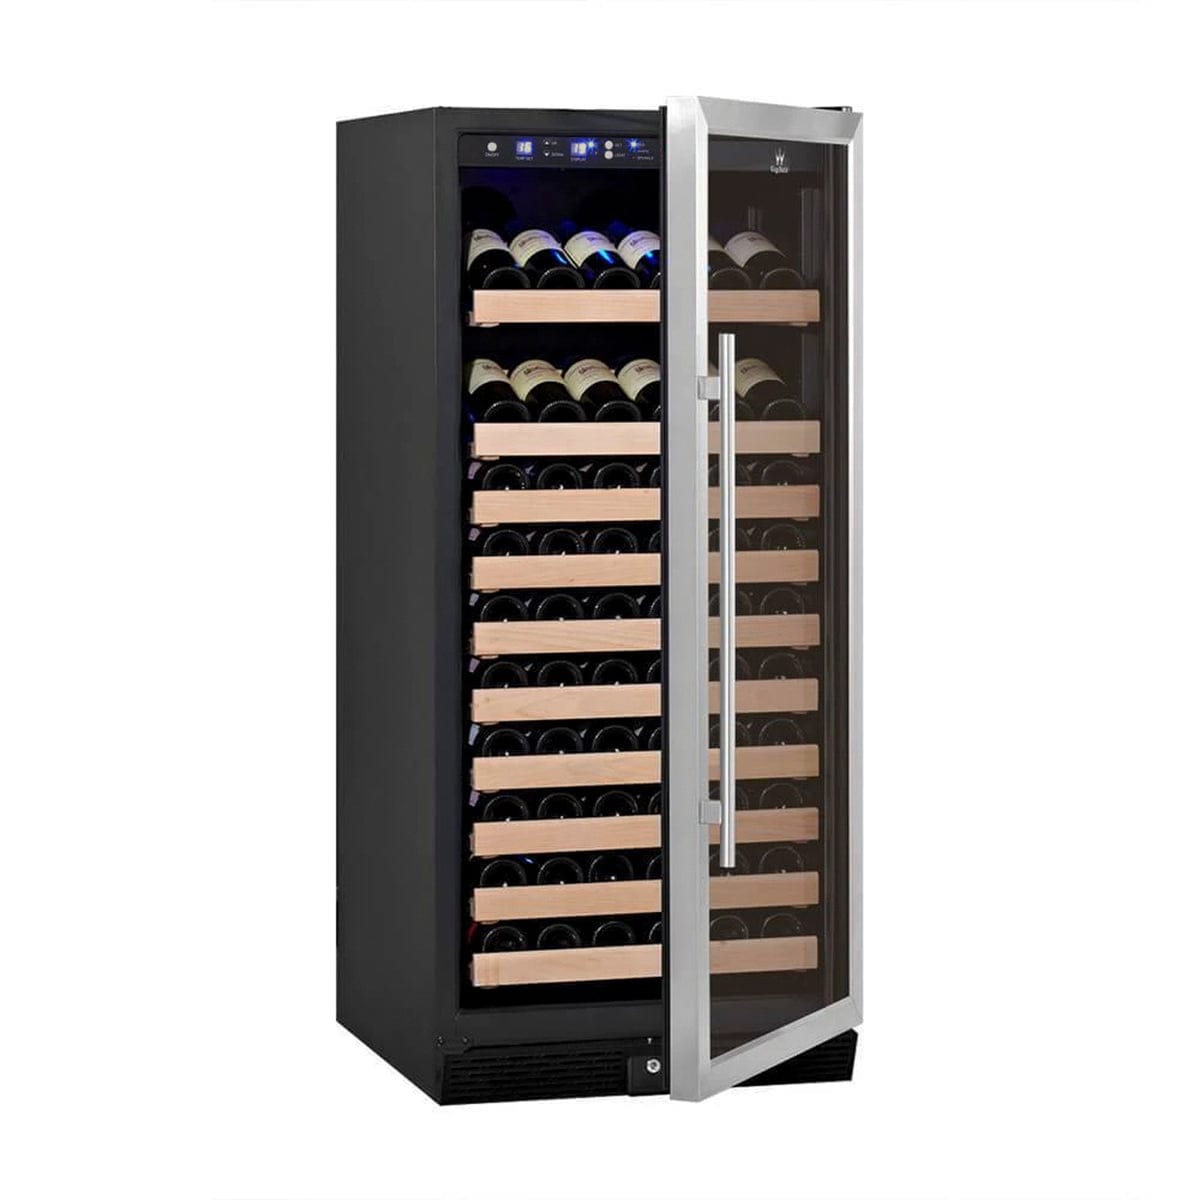 KingsBottle 100 Bottle Wine Cooler in stainless steel with door open and 2 presentation shelves.